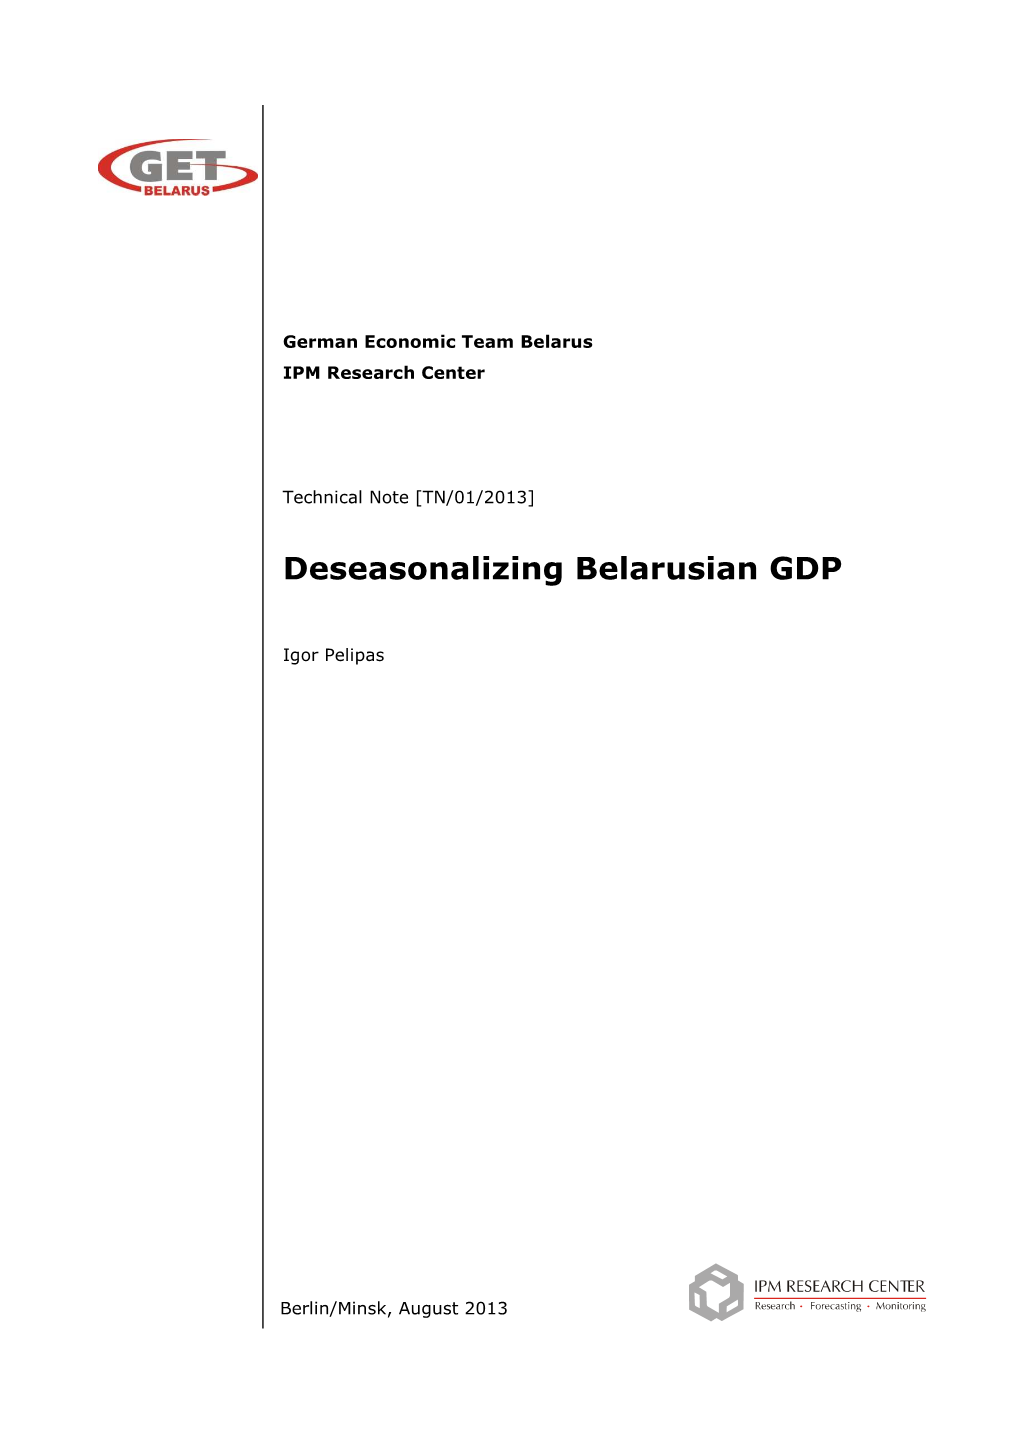 Deseasonalizing Belarusian GDP